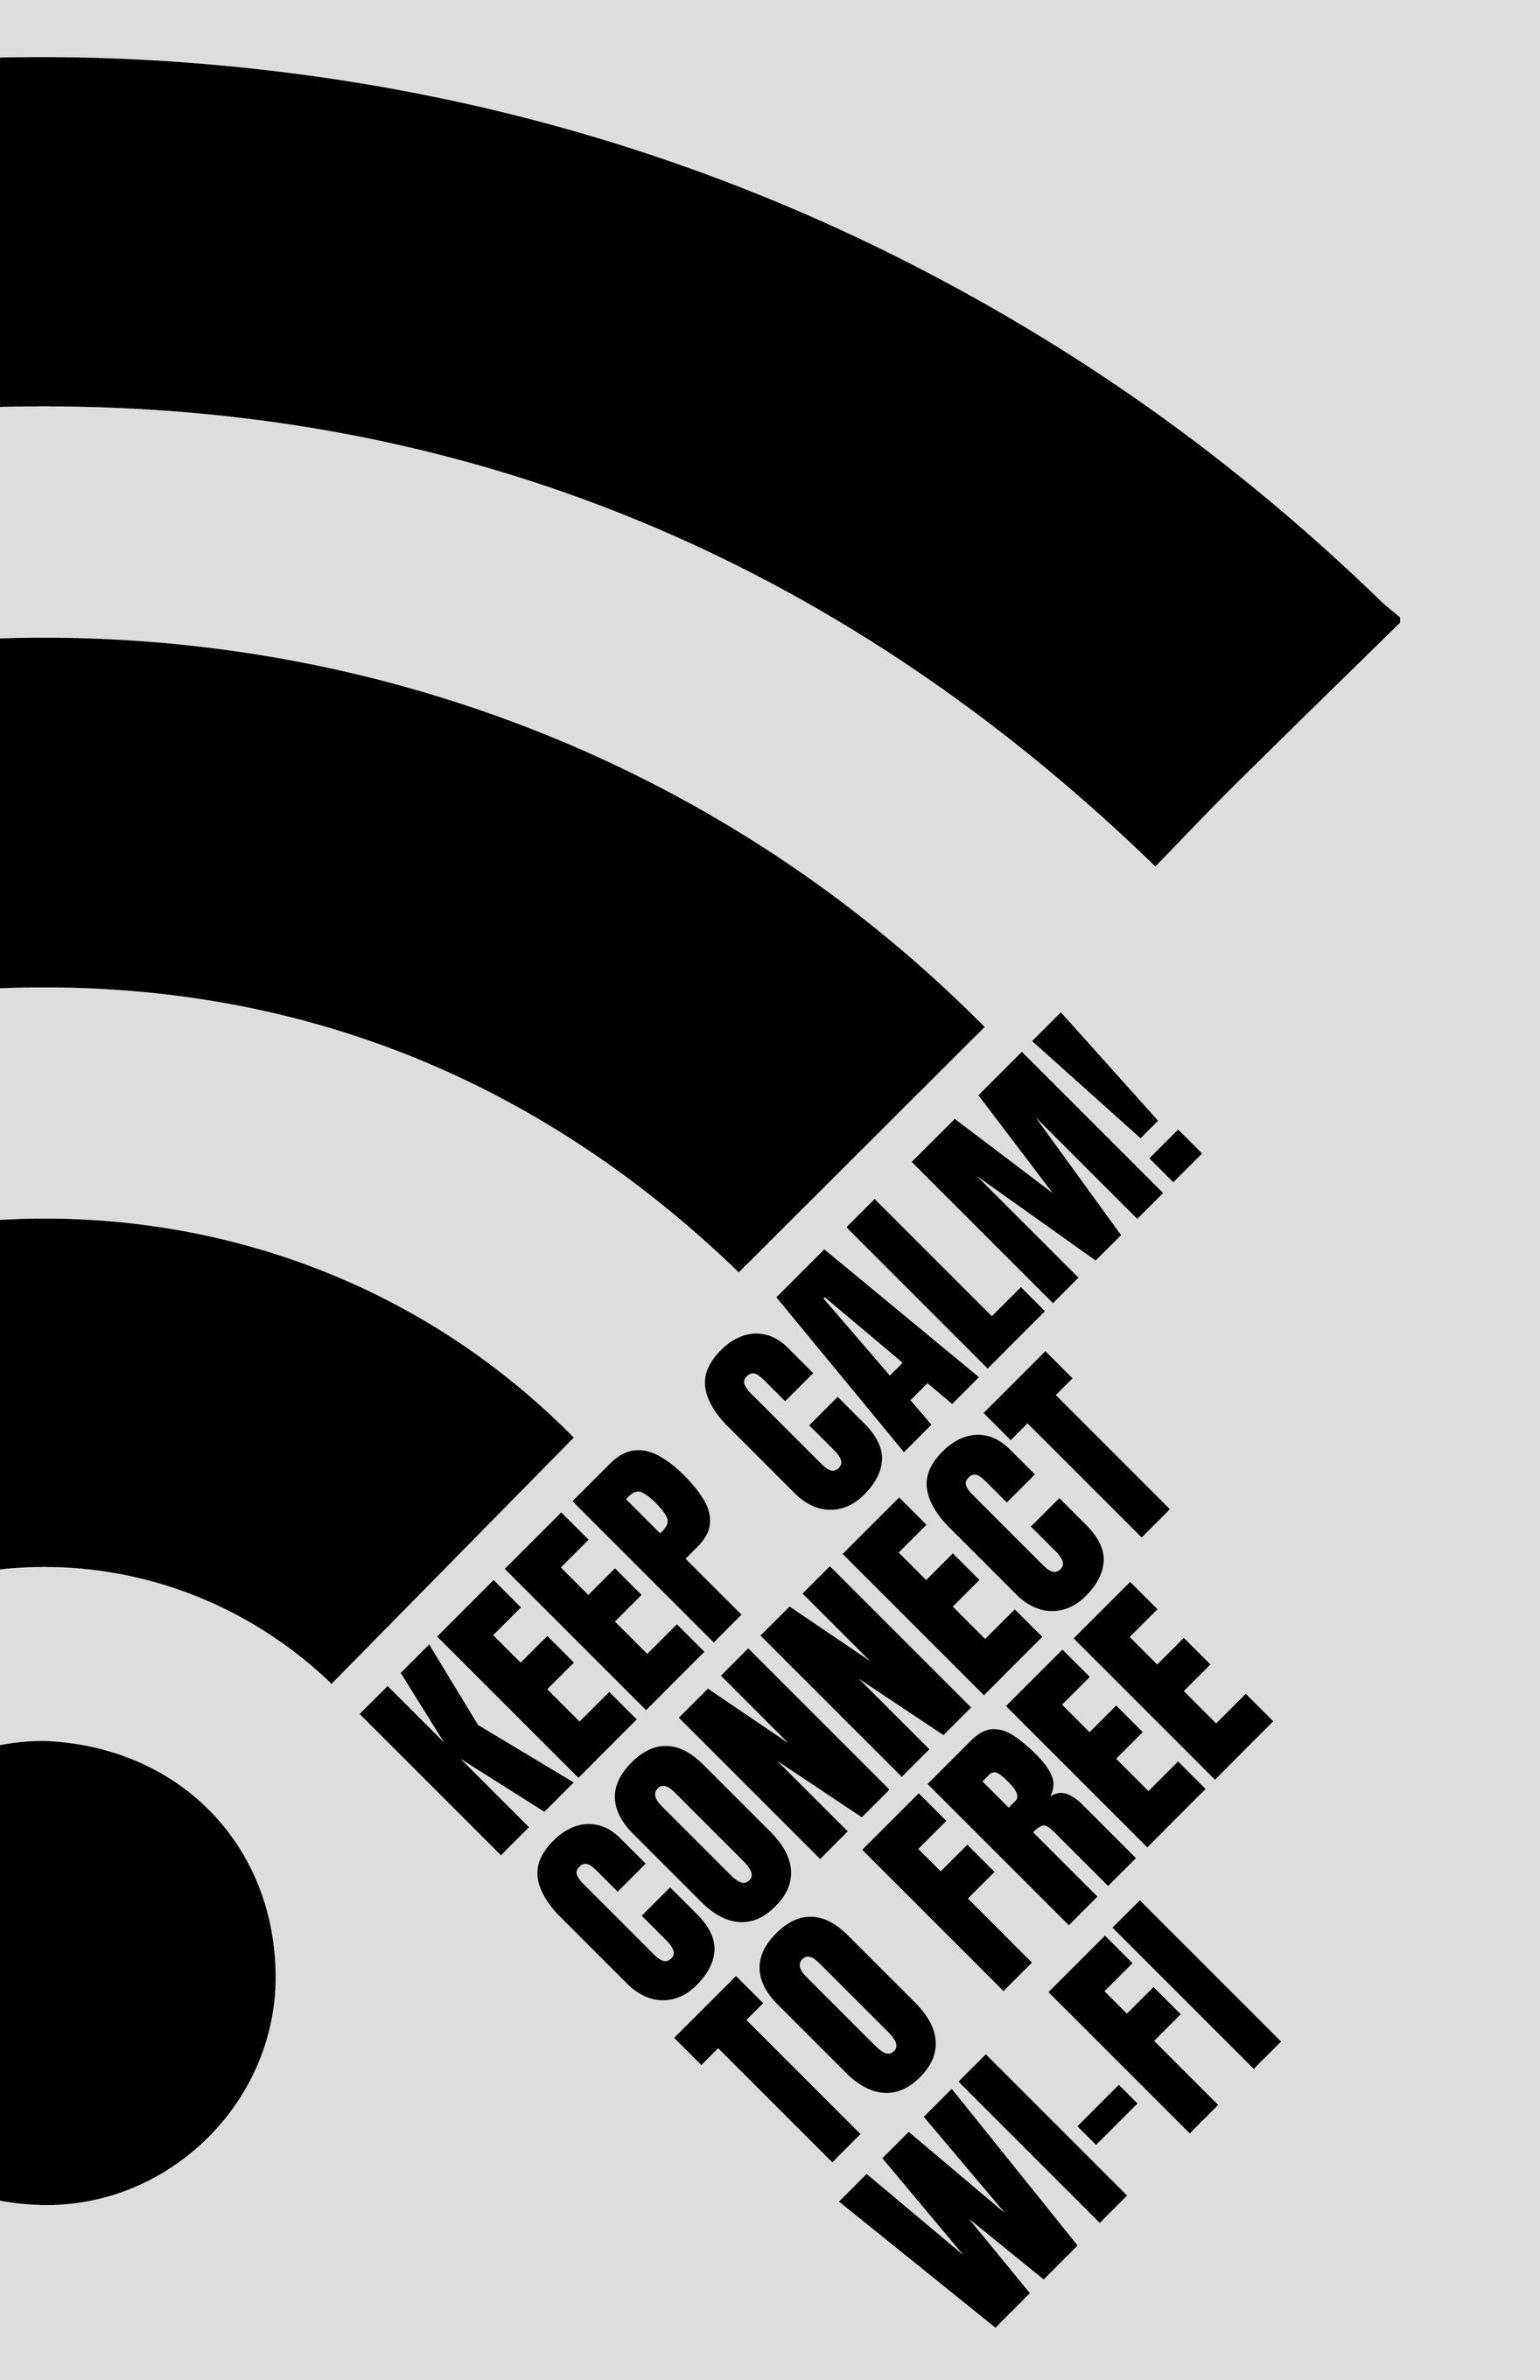 Keep Calm Wi-fi - Poster Template